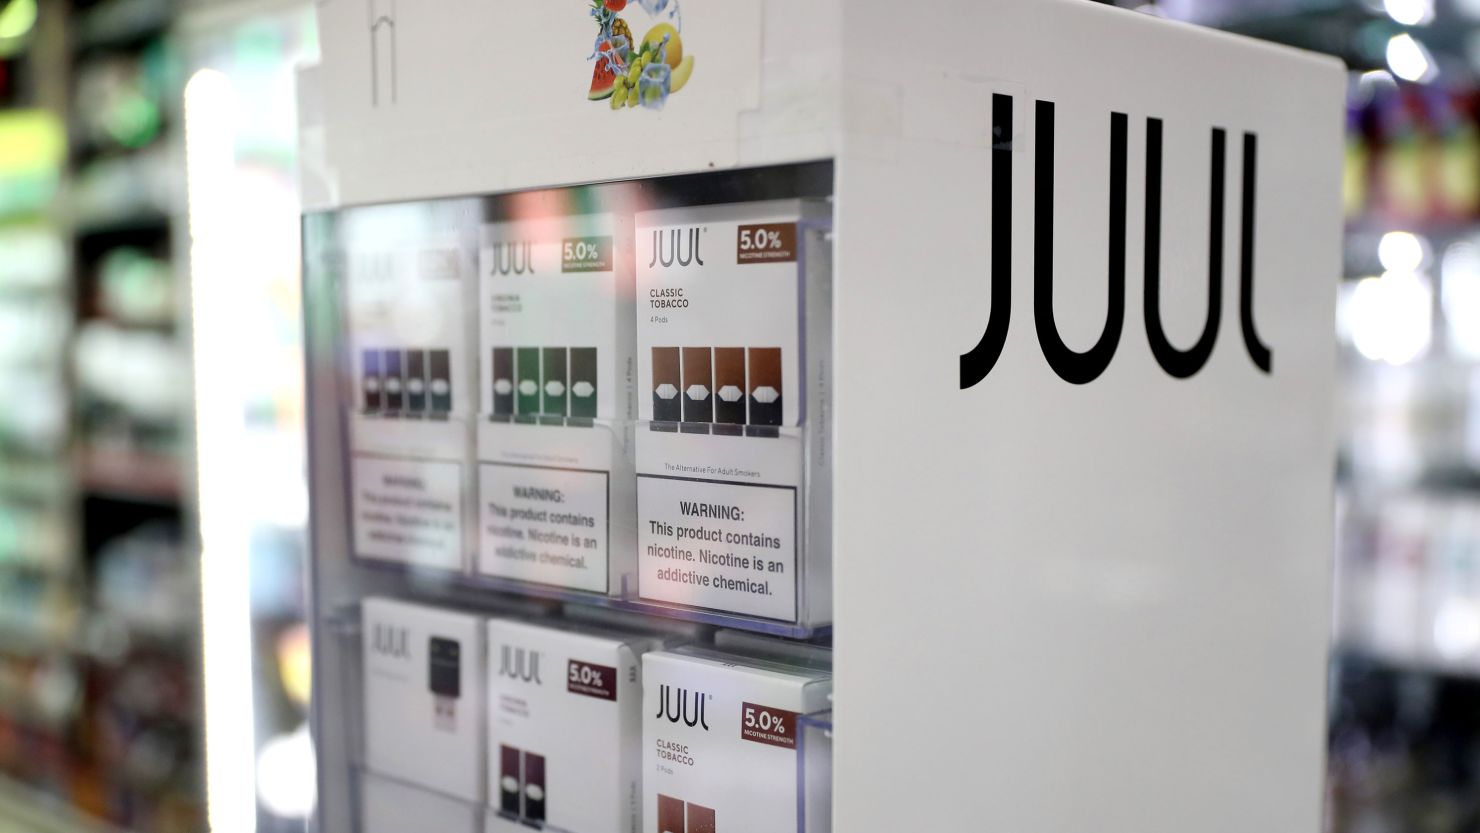 Several lawsuits have been filed against e-cigarette maker Juul.